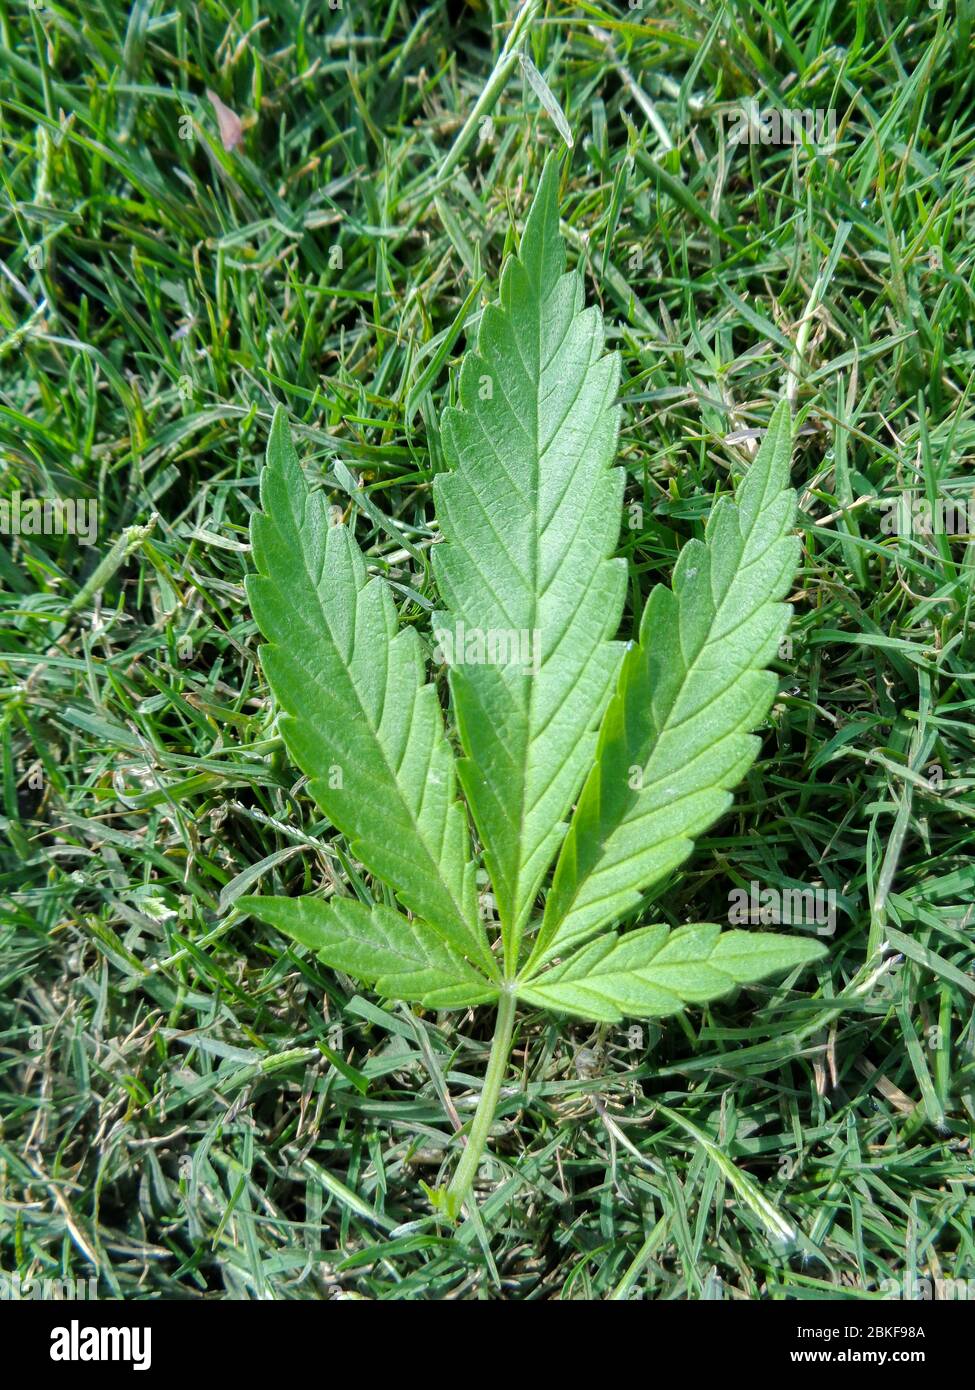 Medical marijuana leaf on green grass background Stock Photo